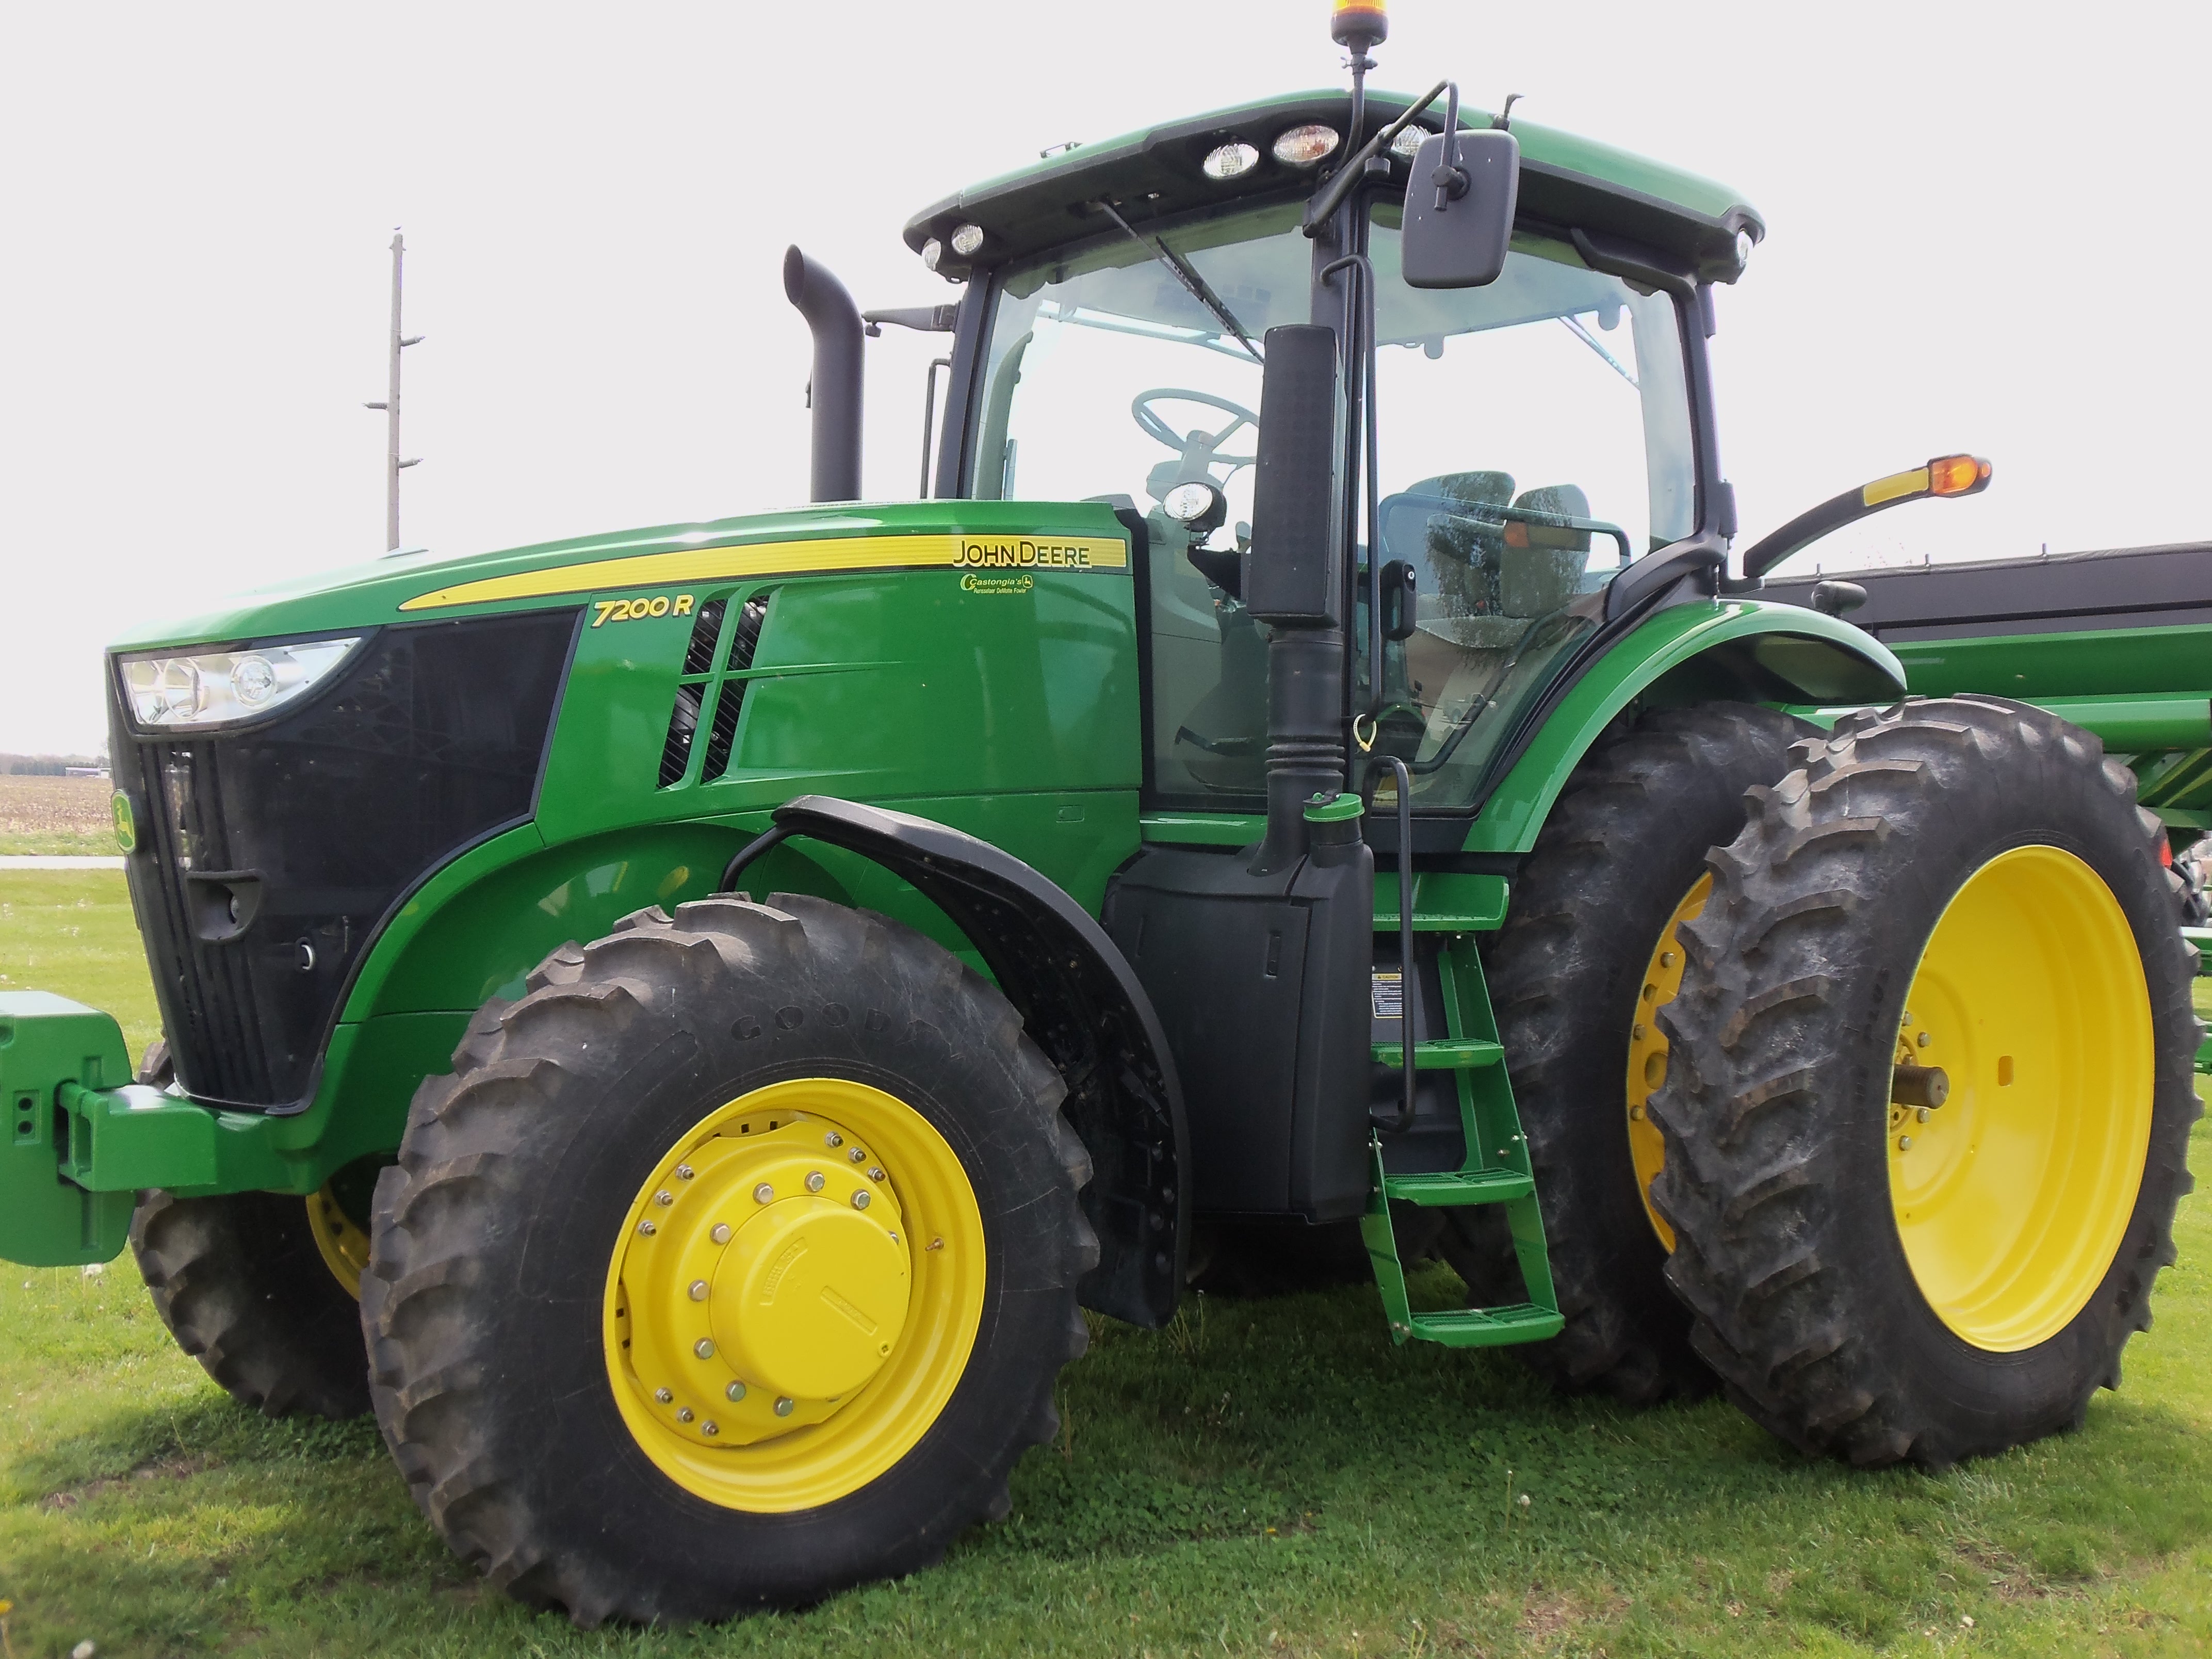 Large 7R Series tractor | John Deere equipment | Pinterest